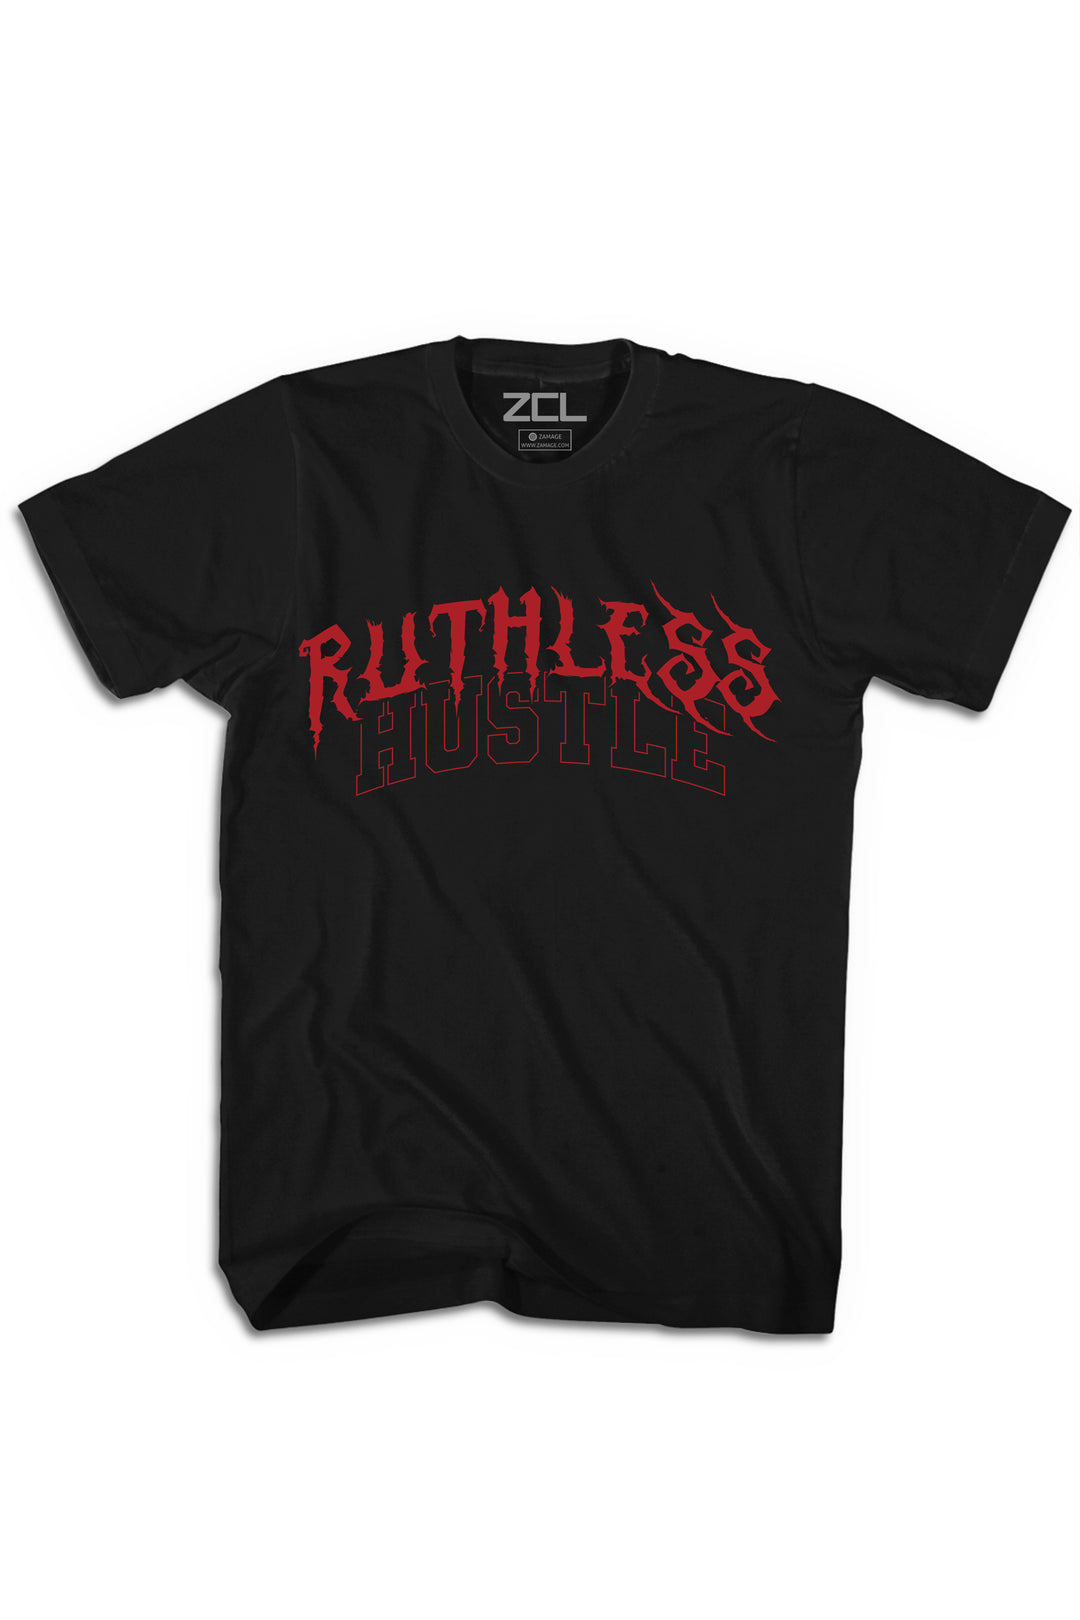 Ruthless Hustle Tee (Red Logo) - Zamage